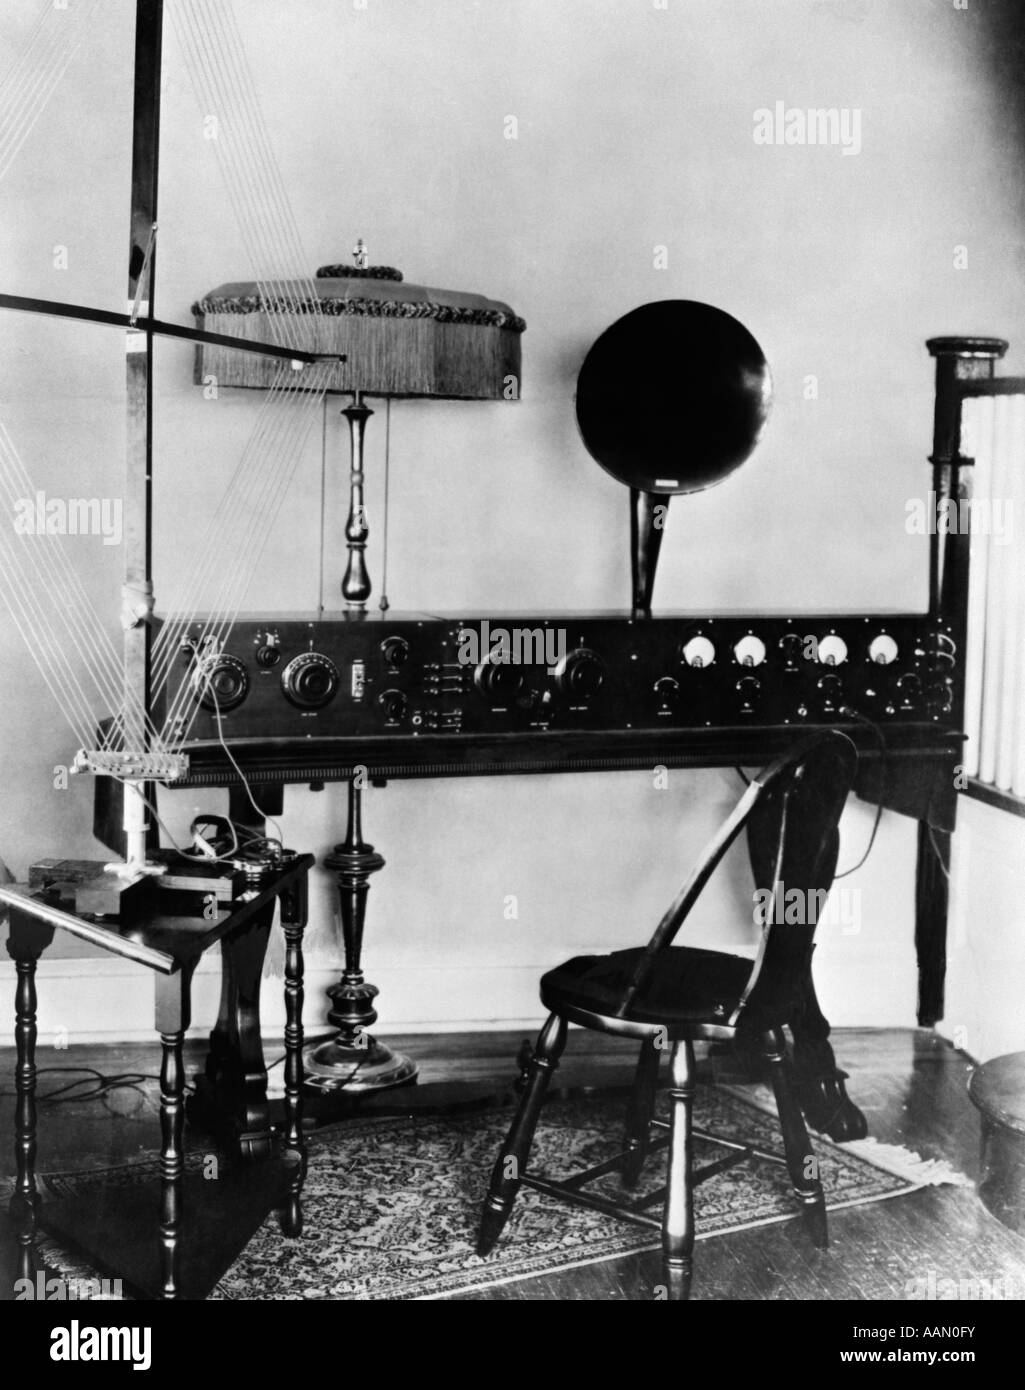 1918 ANTIQUE SPECIAL SUPER HETERODYNE RADIO Stock Photo